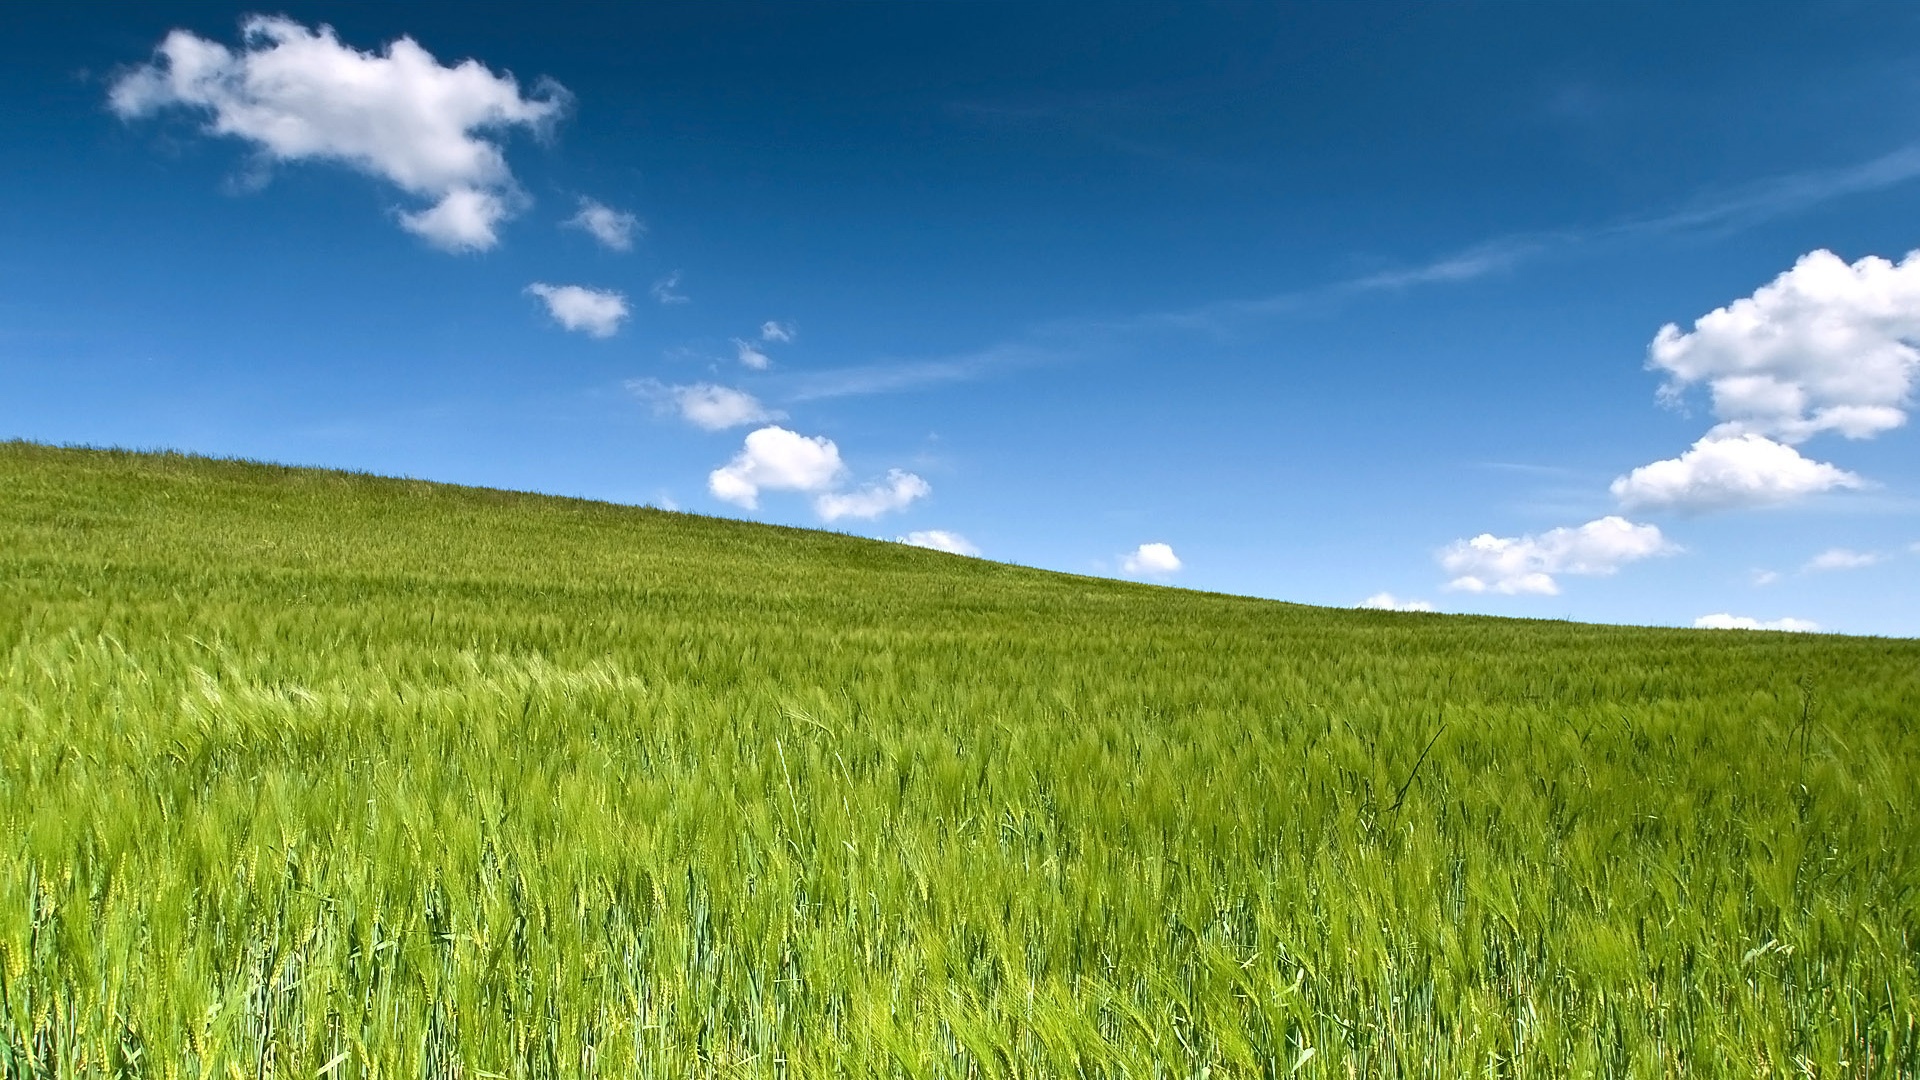 green field wallpaper,grassland,people in nature,natural landscape,sky,nature